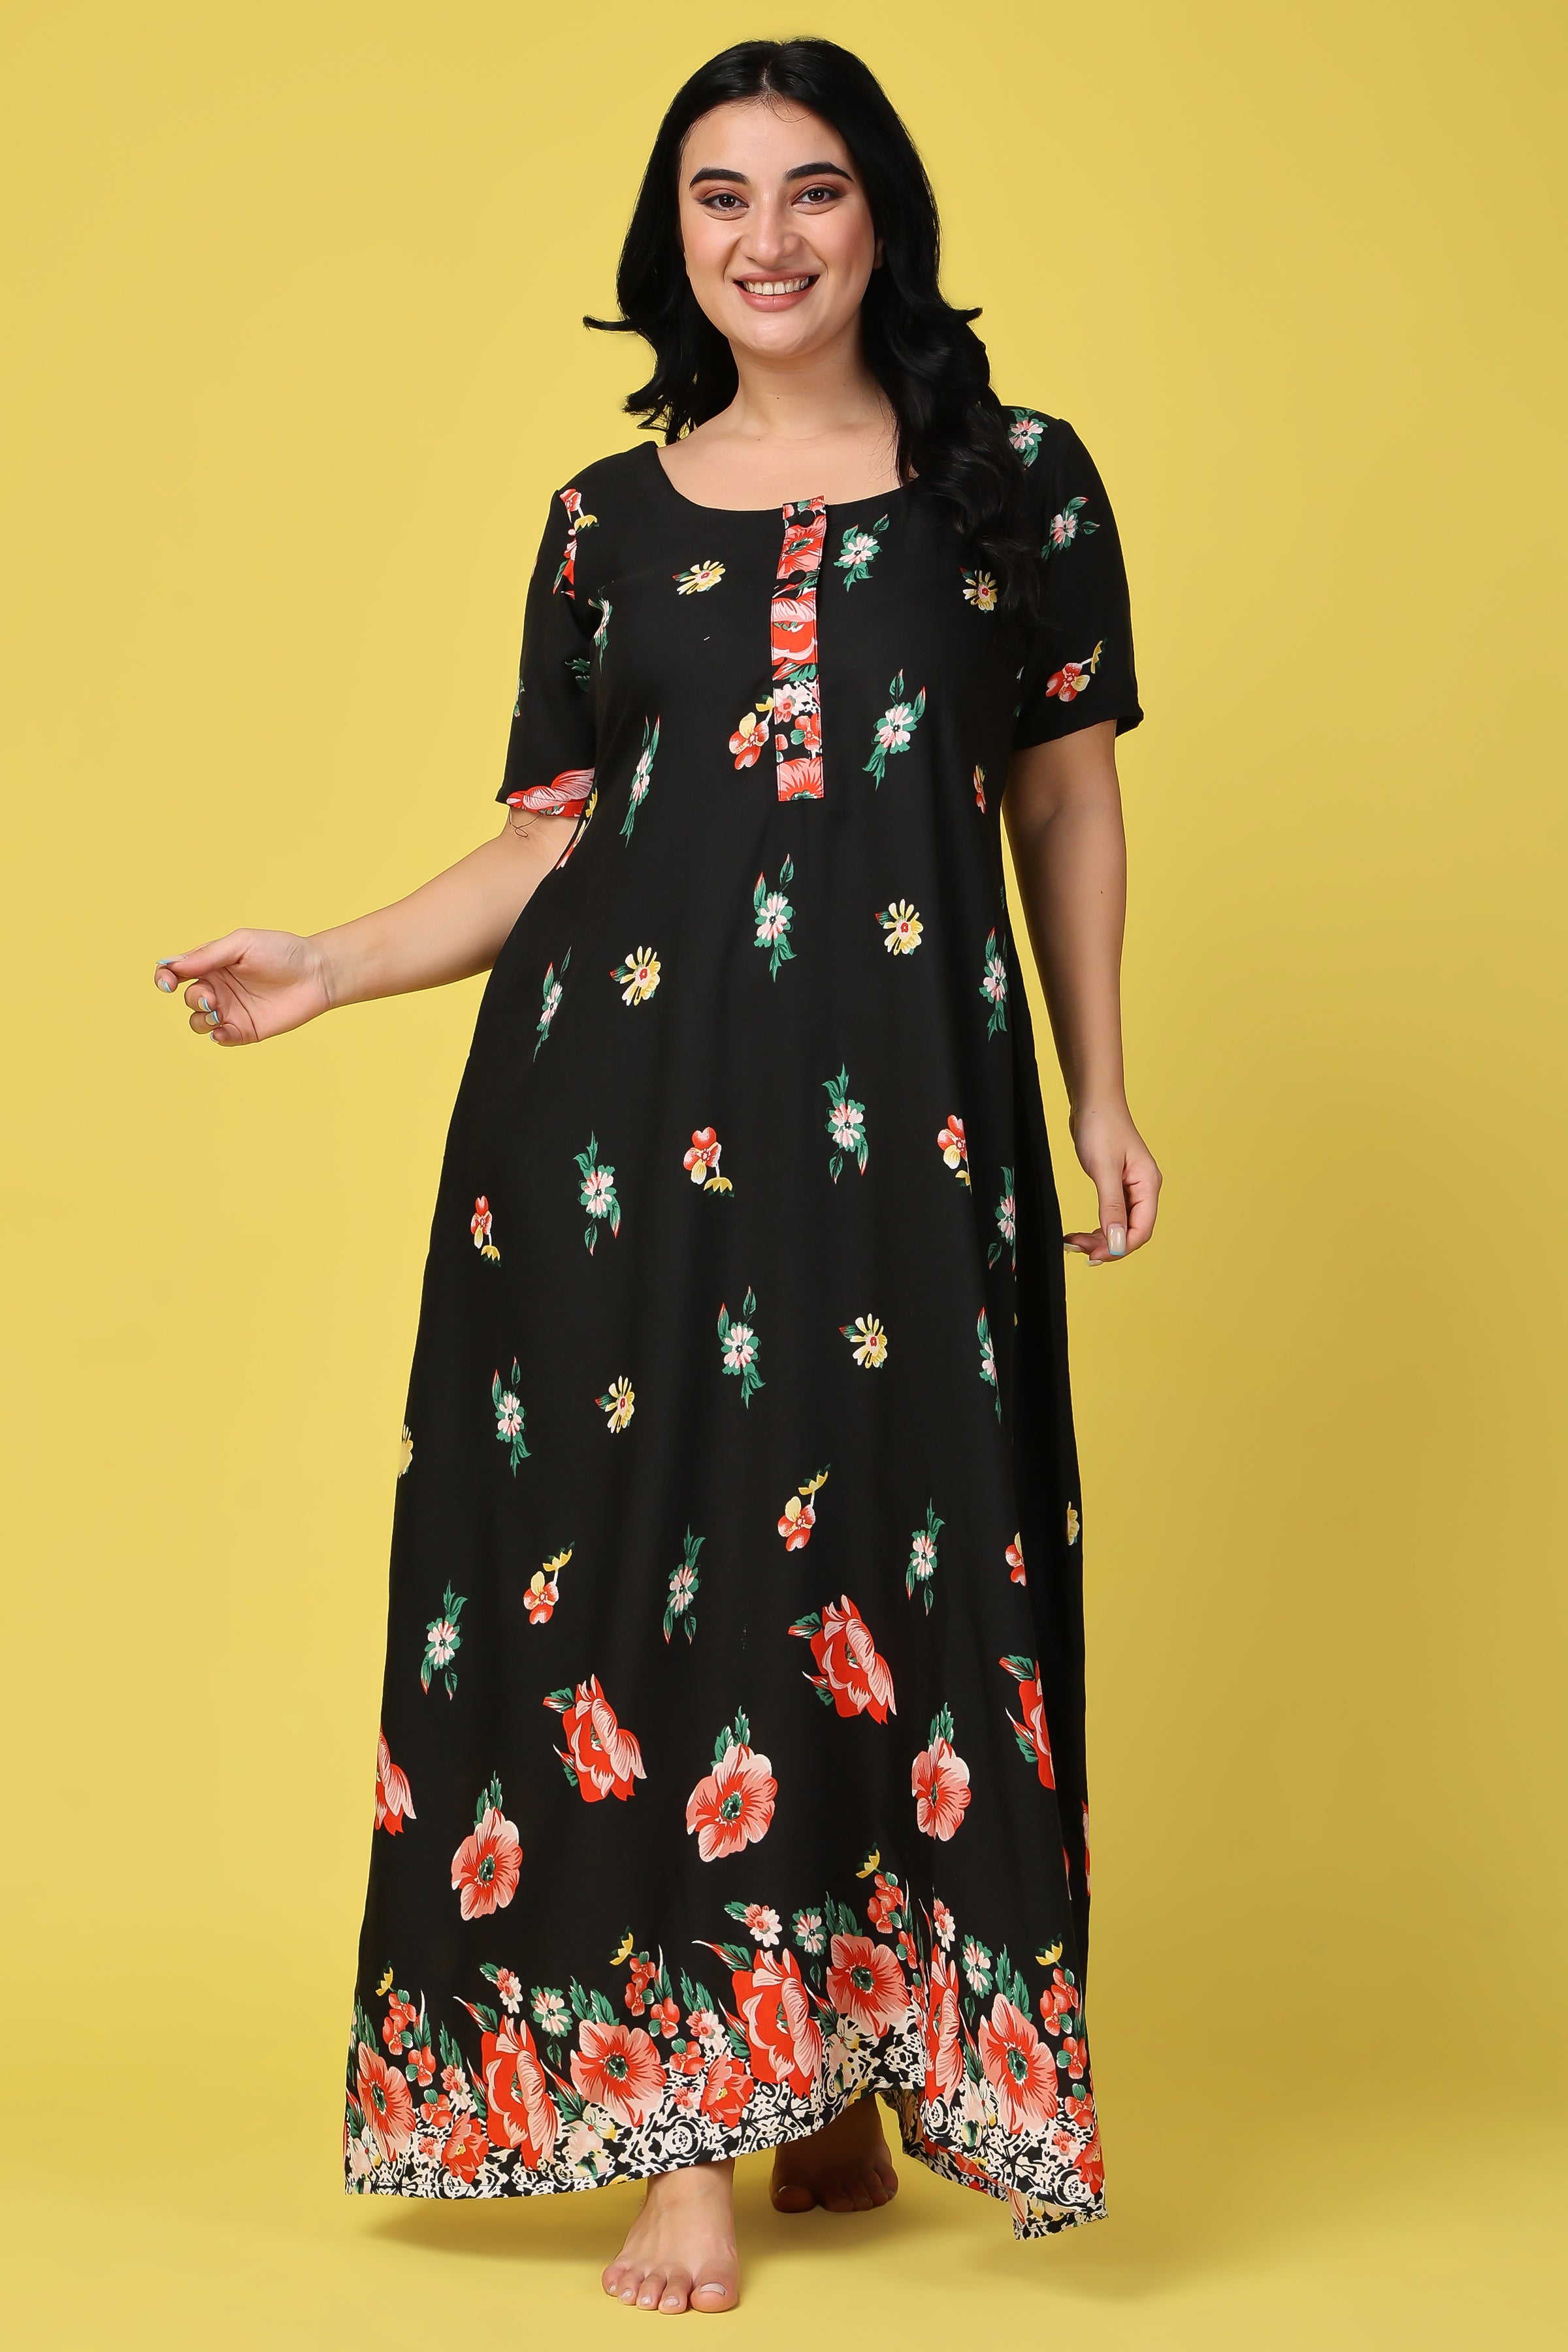 Buy LENISSA Cotton Nightwear Set for Women - Women's Cotton Nightsuit  Multicolour at Amazon.in